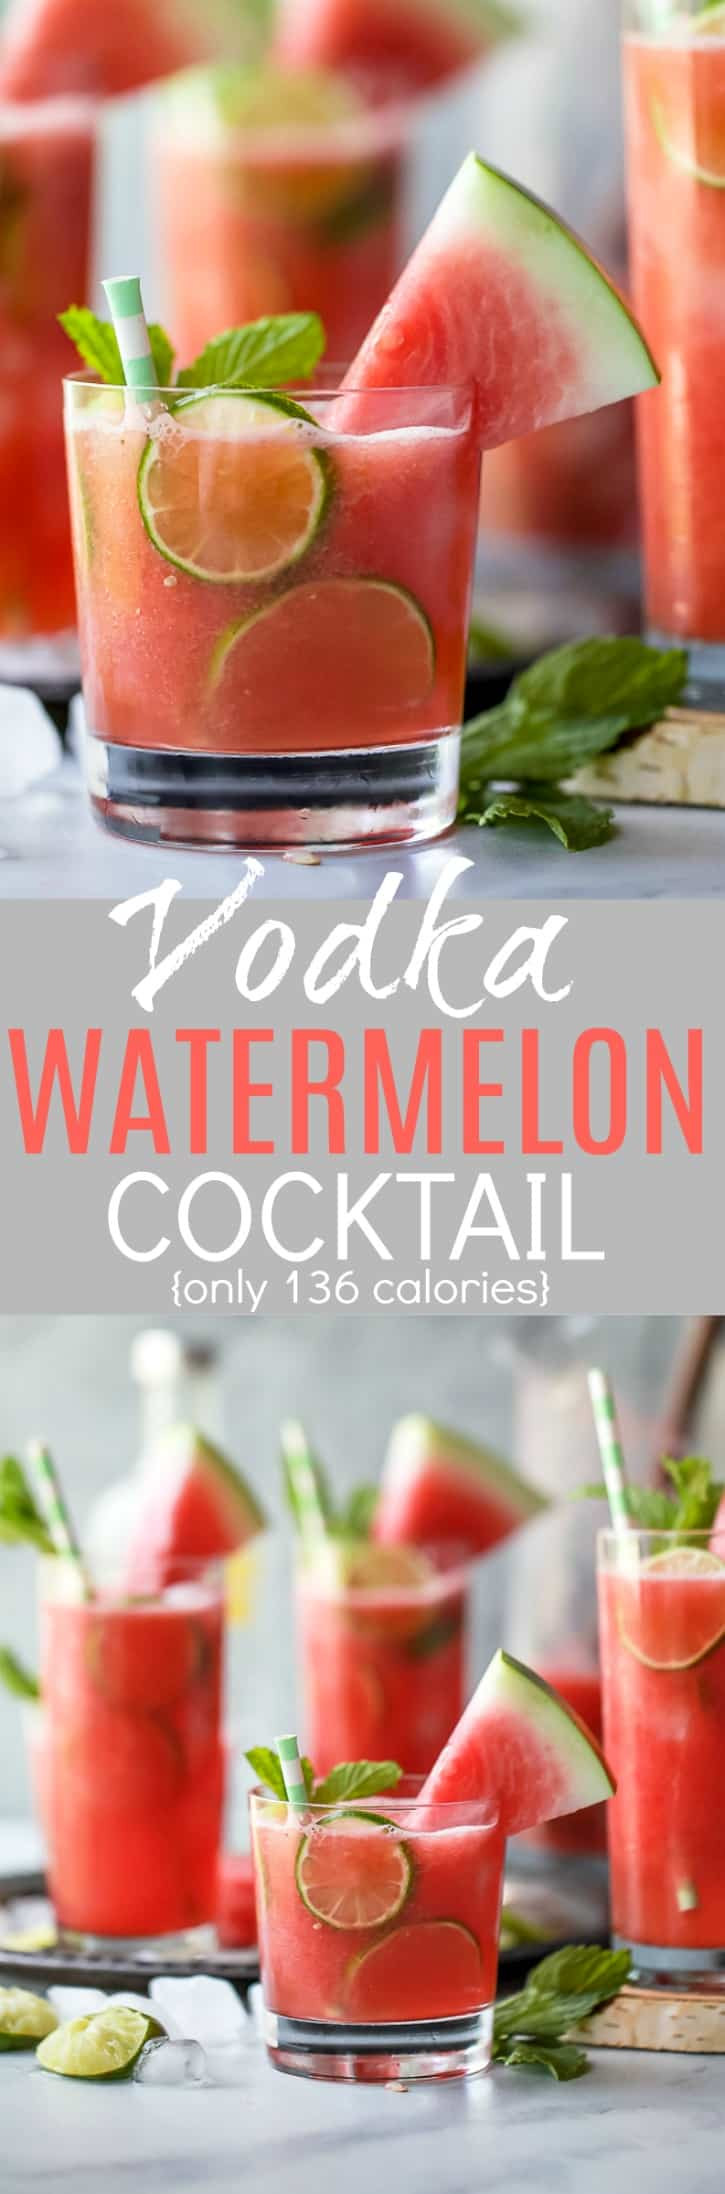 Healthy Vodka Drinks
 Vodka Watermelon Cocktail Recipe